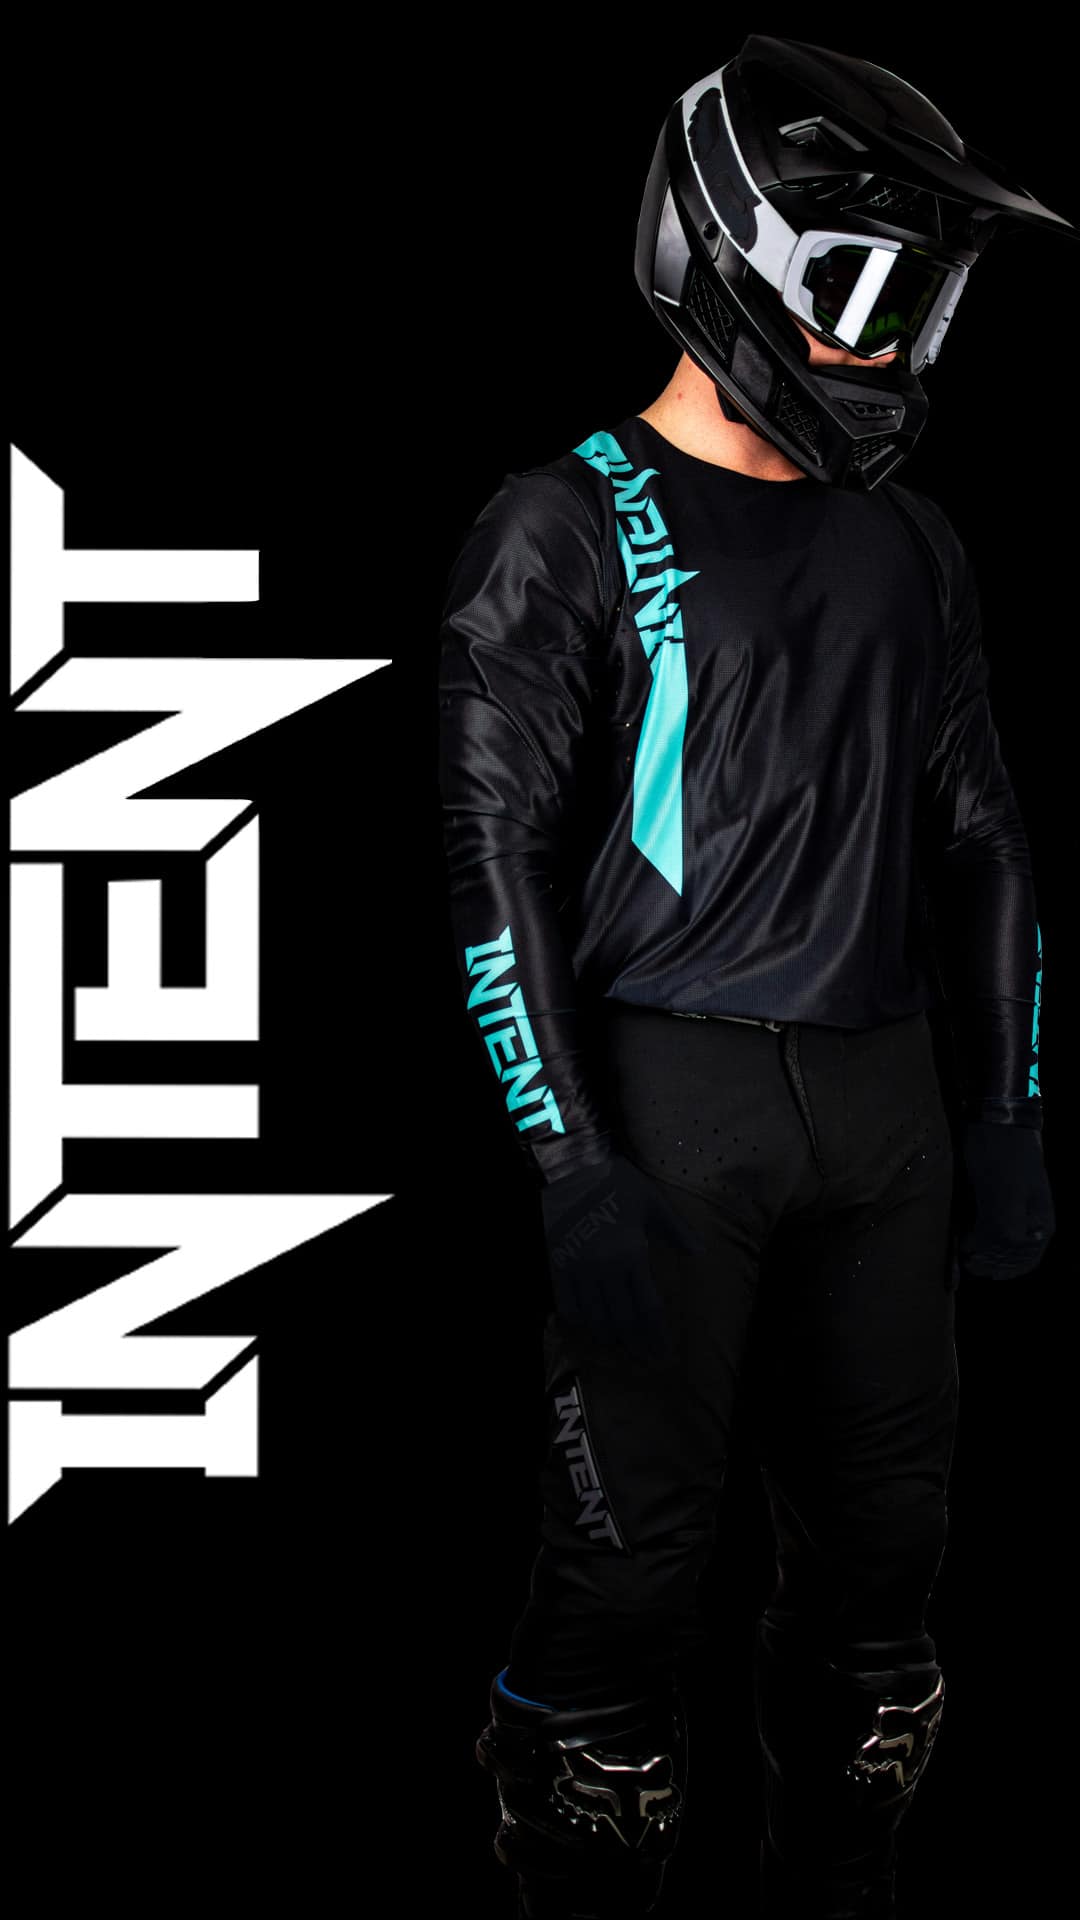 Intent Mx Pinned – Teal/Black Motocross Gear Set